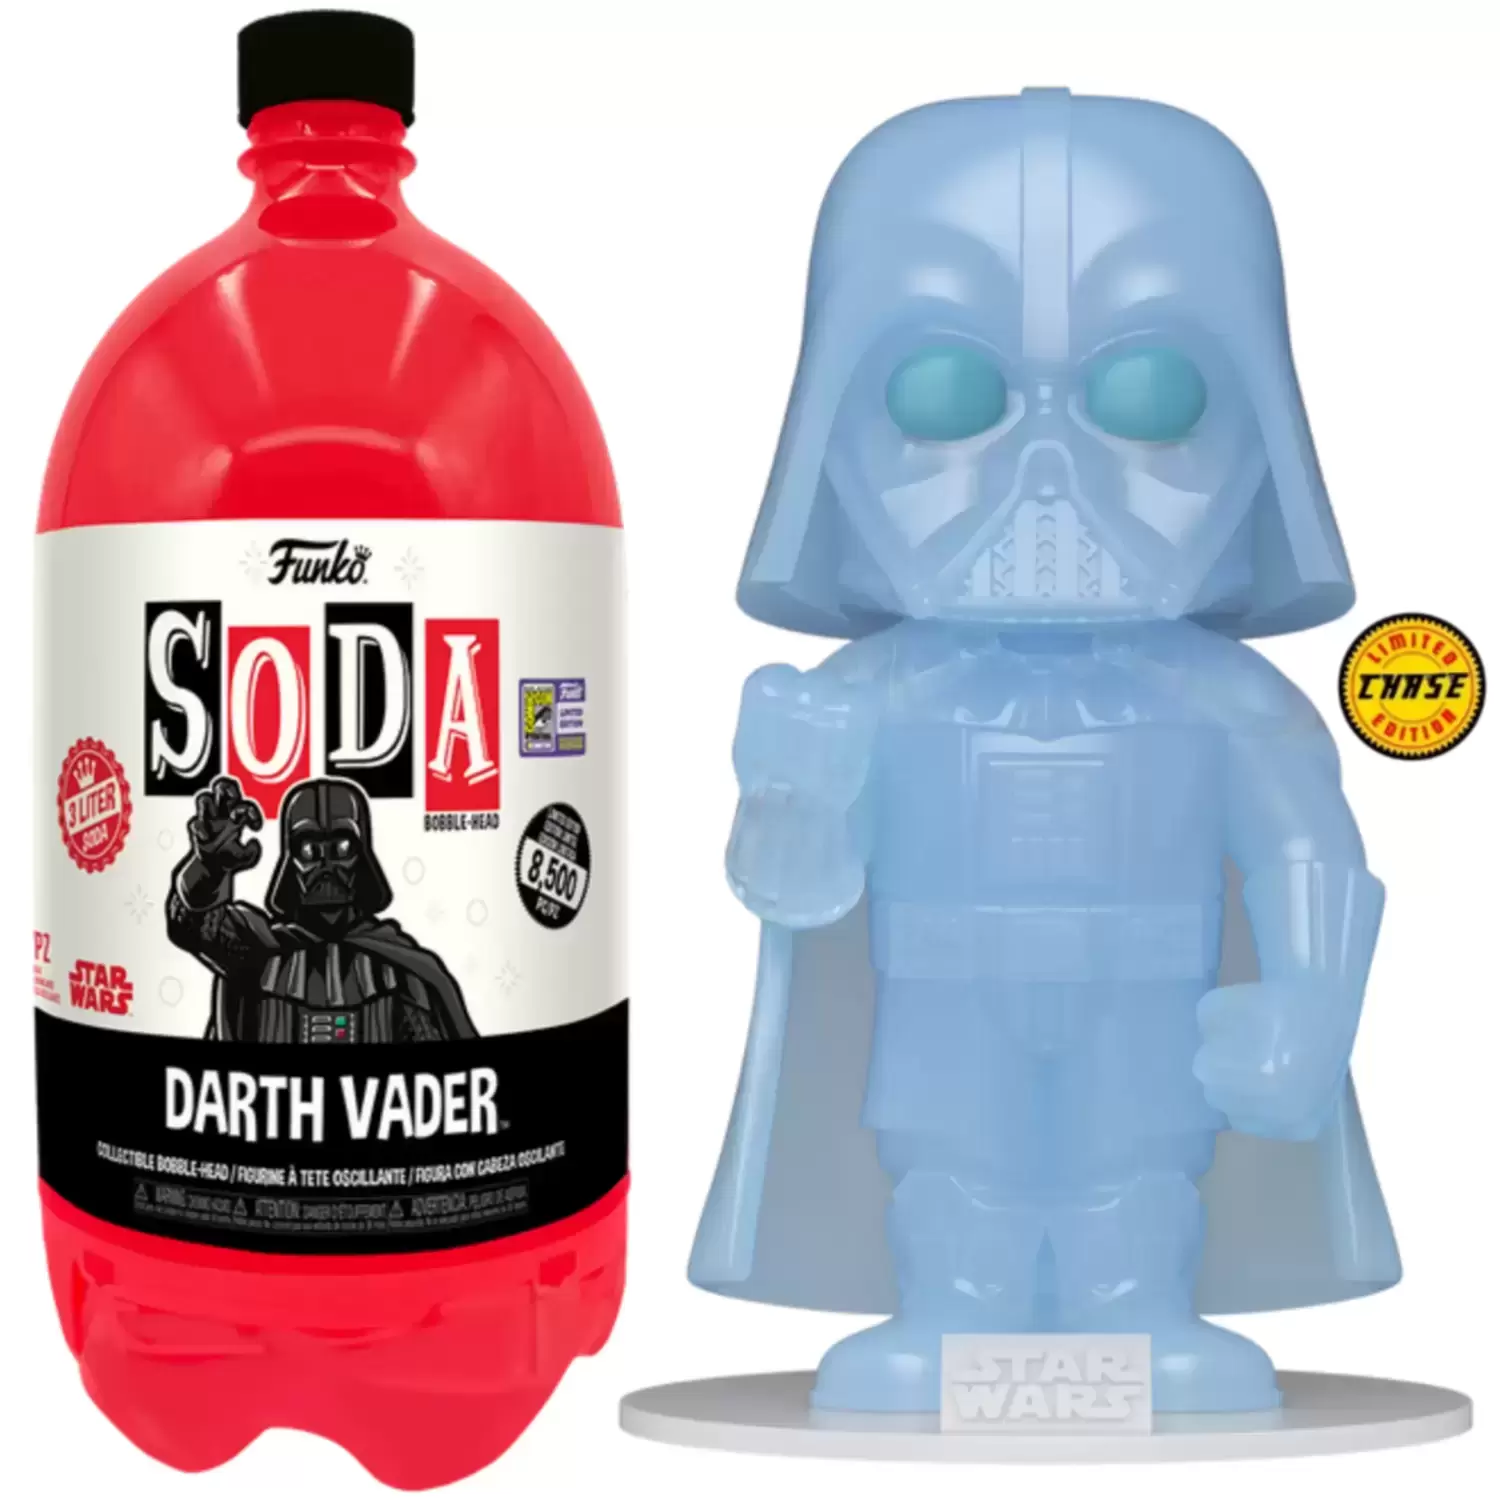 Vinyl Soda! - Star Wars - Darth Vader Chase